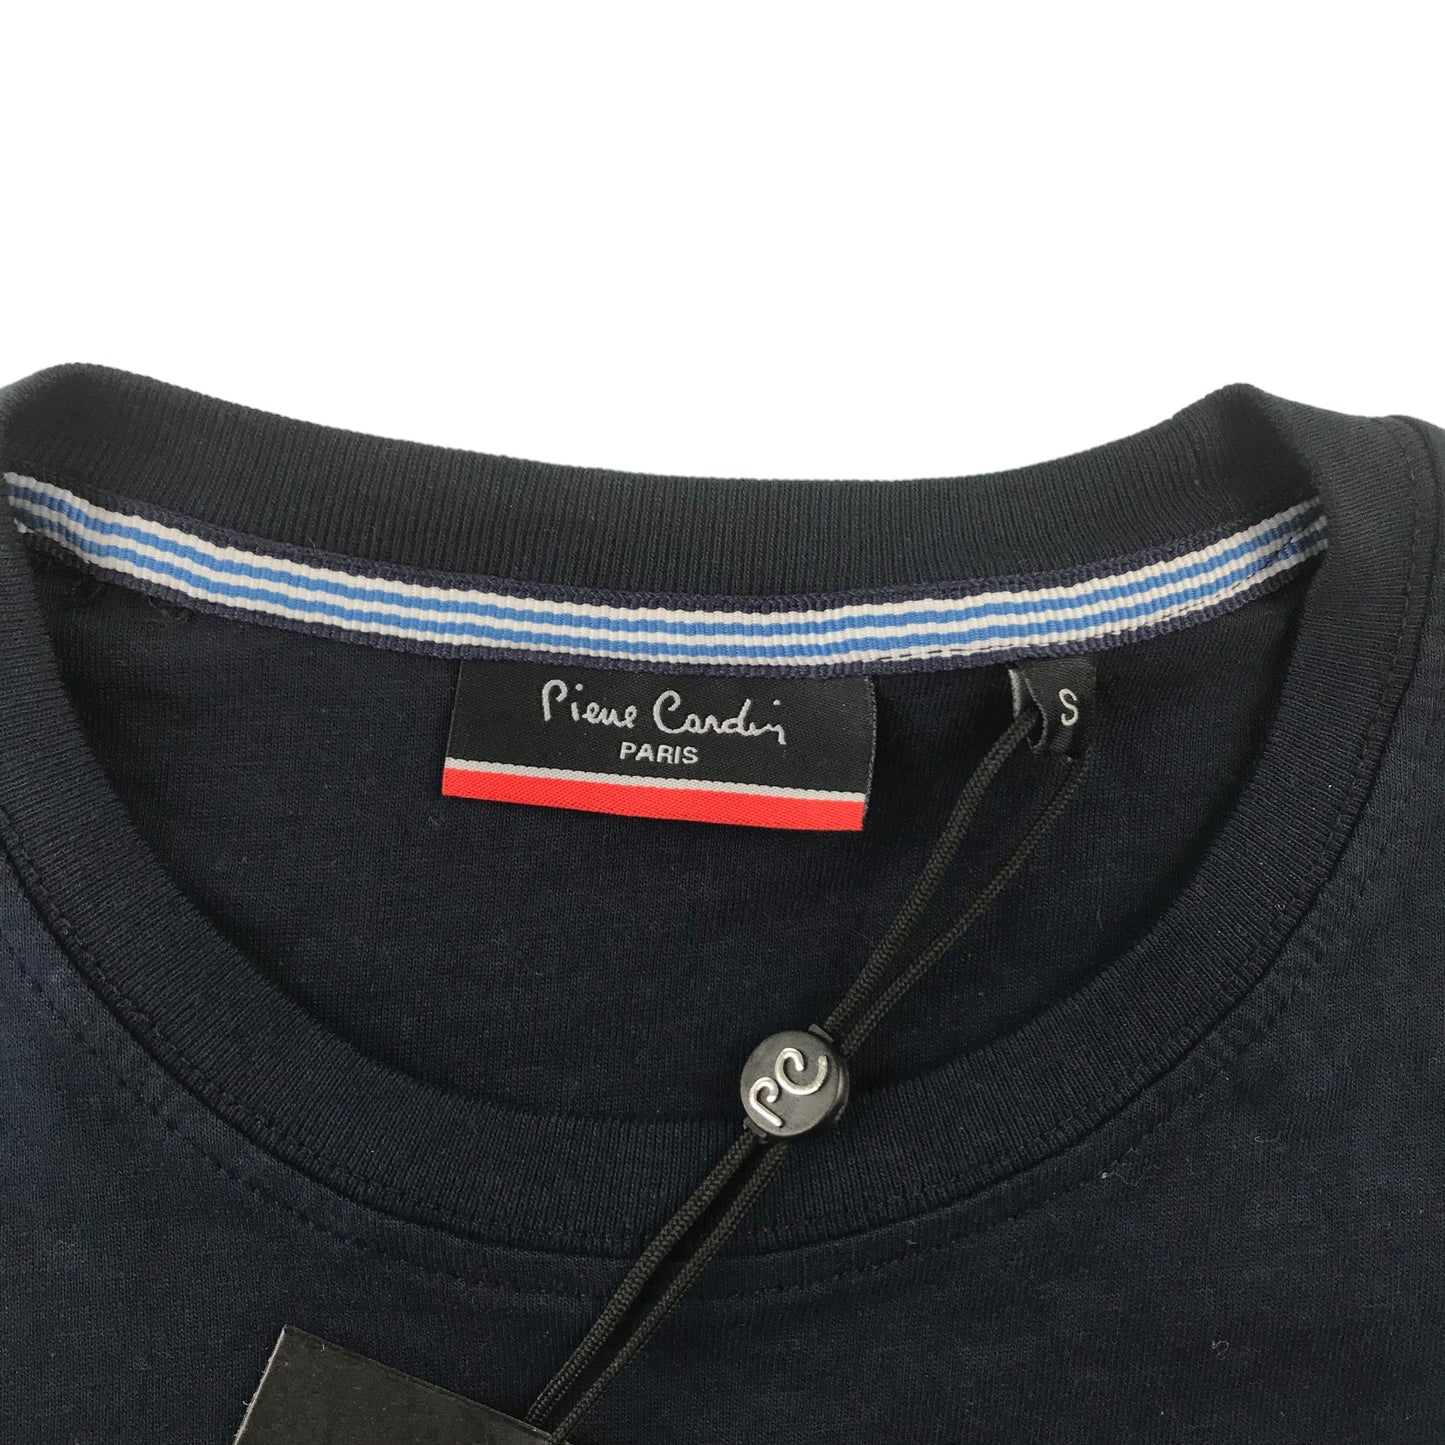 Pierre Cardin T-shirt Size Small Navy Blue Plain Short Sleeve Cotton